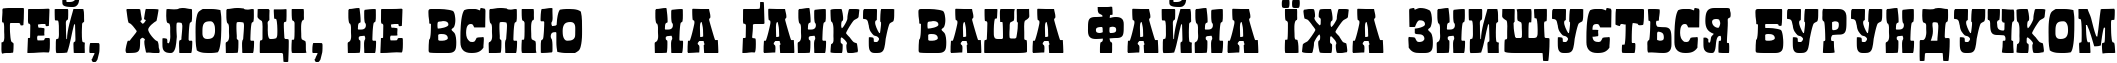 Пример написания шрифтом Boncegro FF 4F текста на украинском